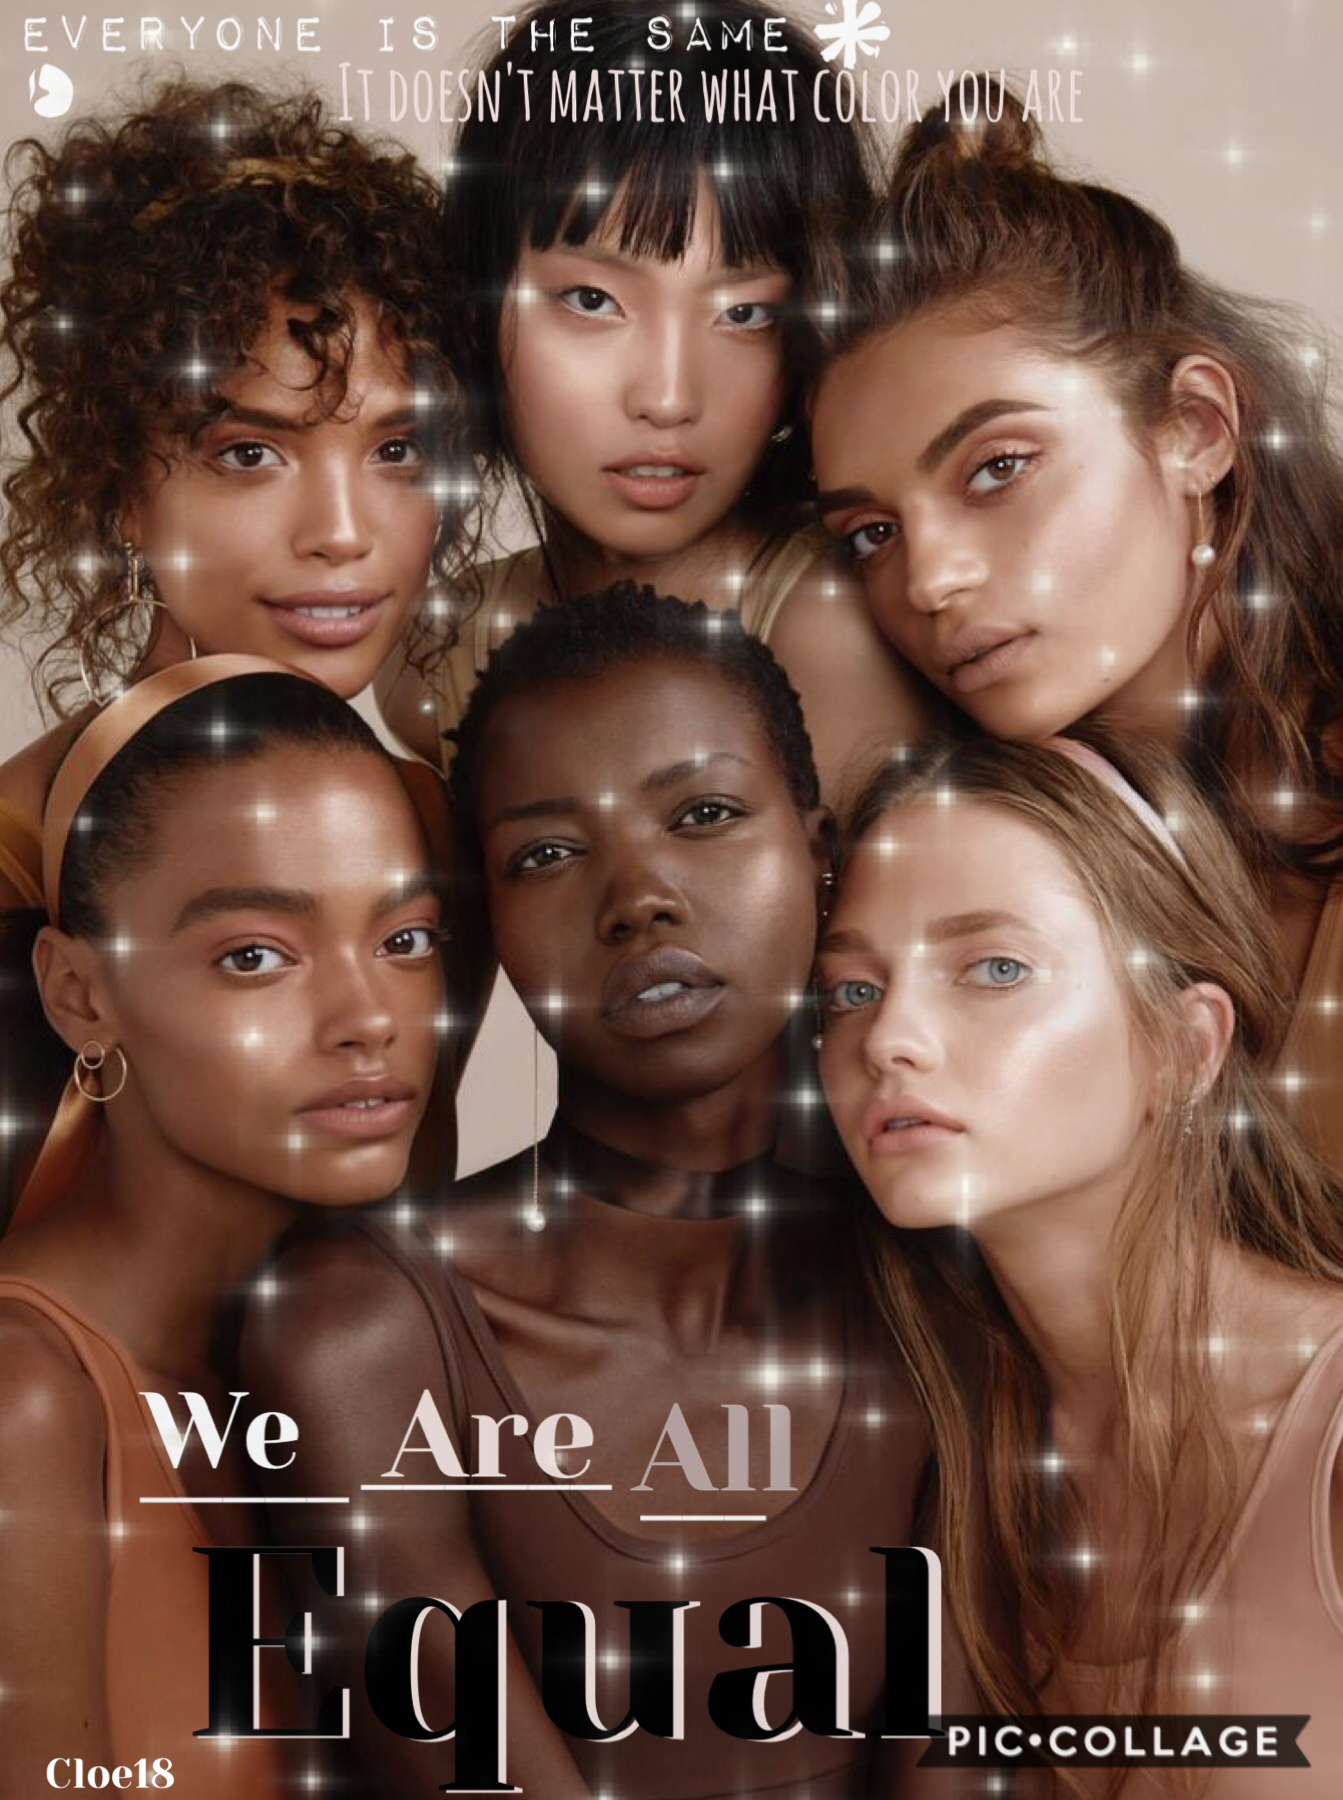 WE ARE ALL EQUAL!!! #Equality ✊🏻✊🏼✊🏽✊🏾✊🏿 -Cloe18